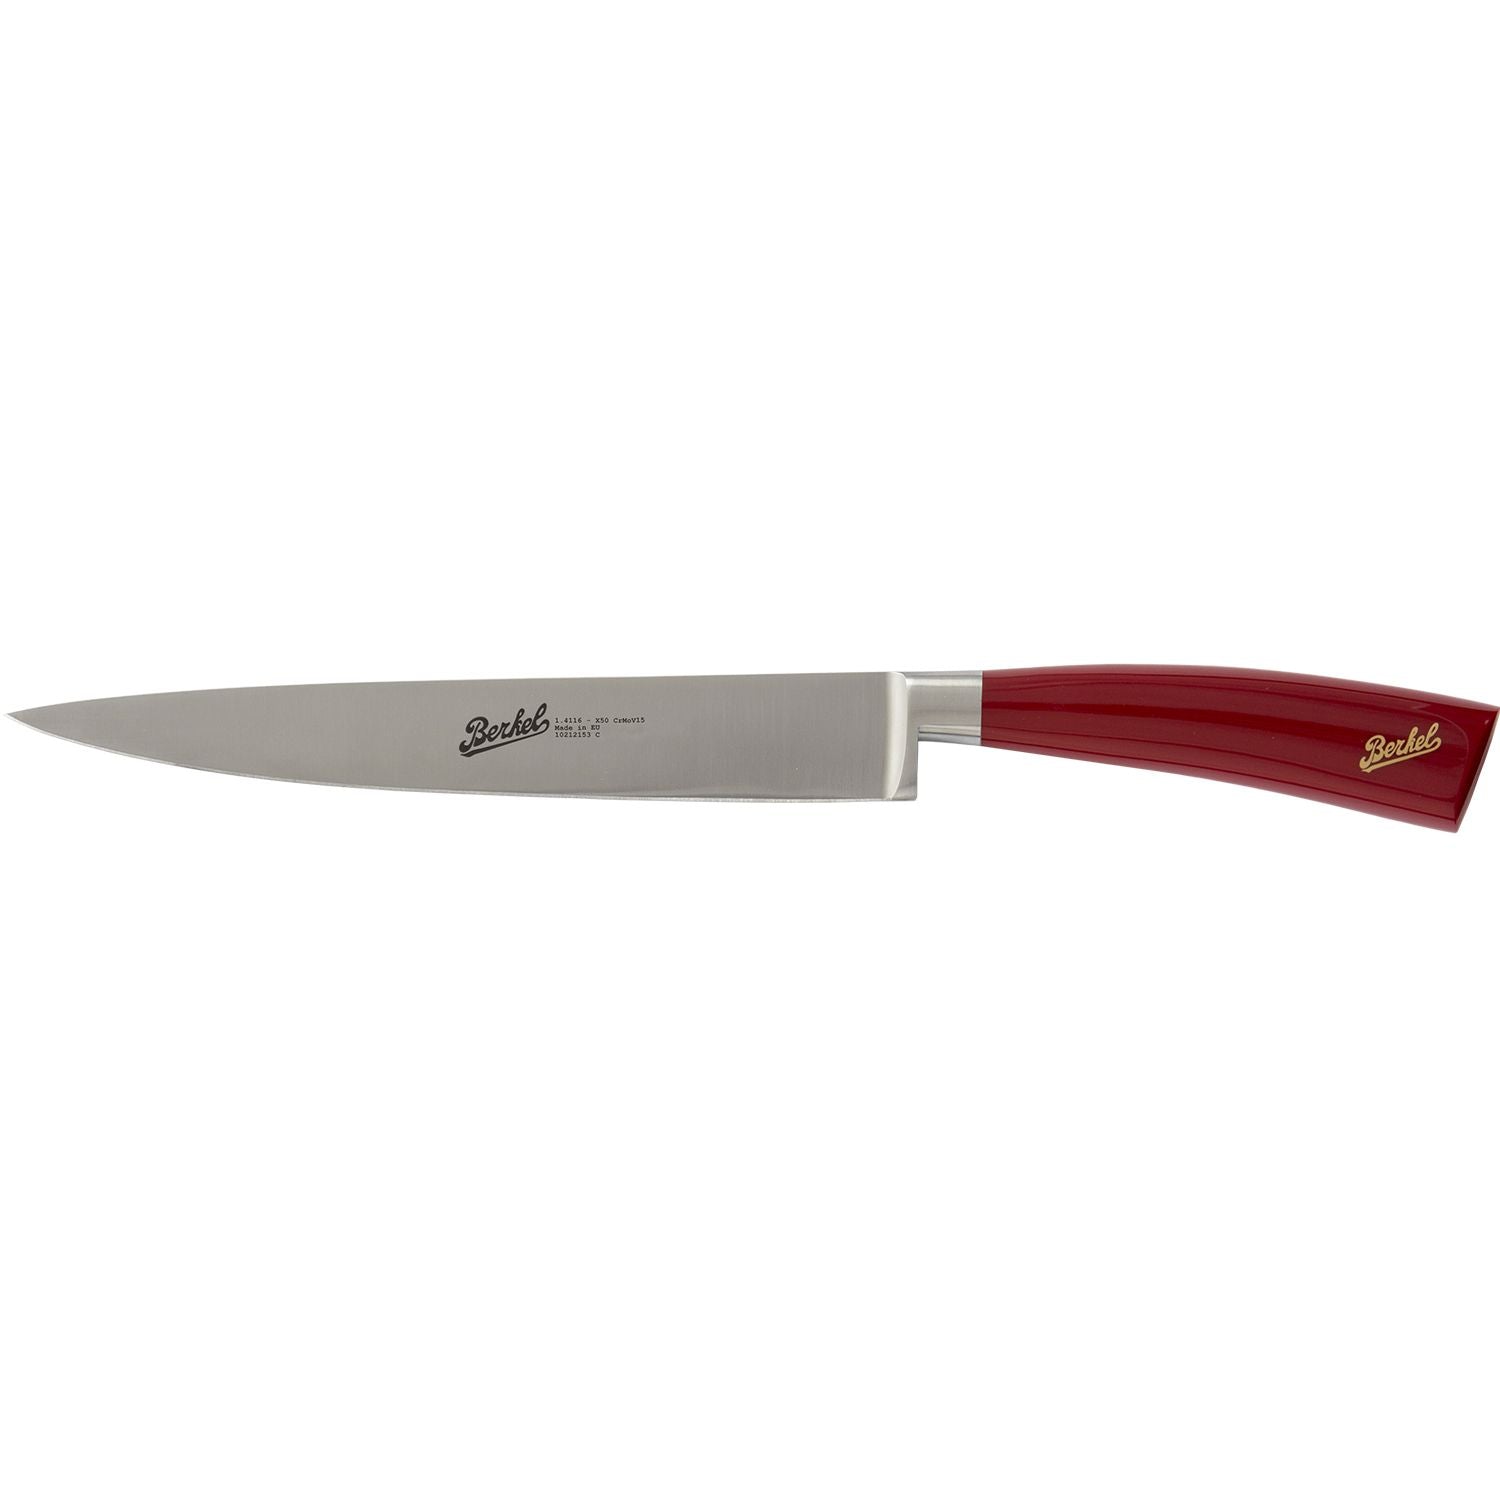 Berkel Elegance Fillet knife cm 21 Steel handle